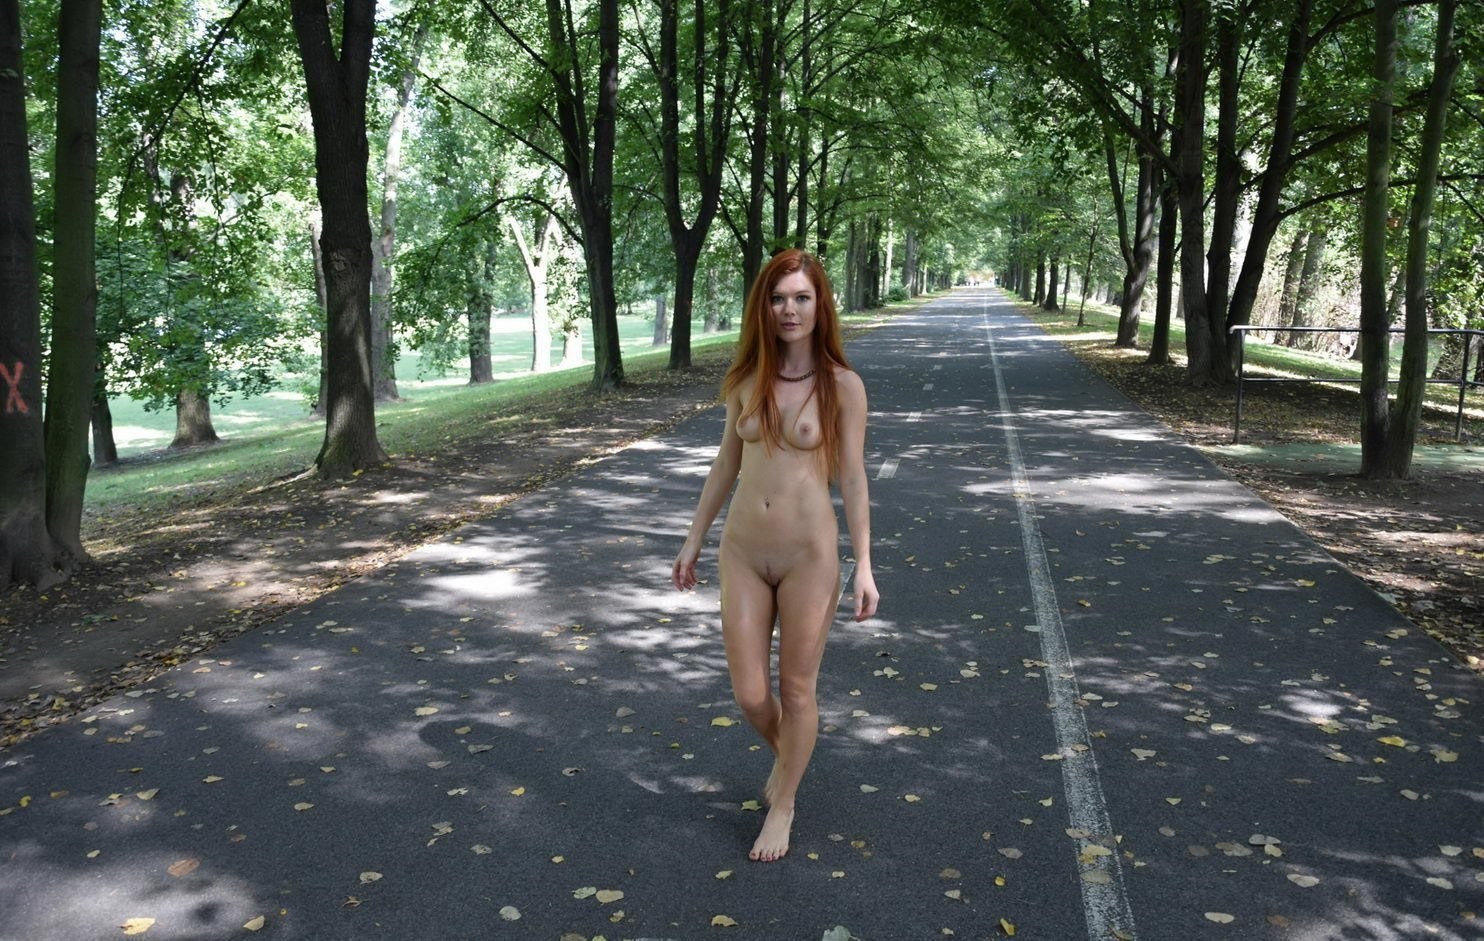 https://motherlesspics.com/uploads/posts/2022-12/1672398709_80-motherlesspics-com-p-porn-walking-around-town-naked-105.jpg